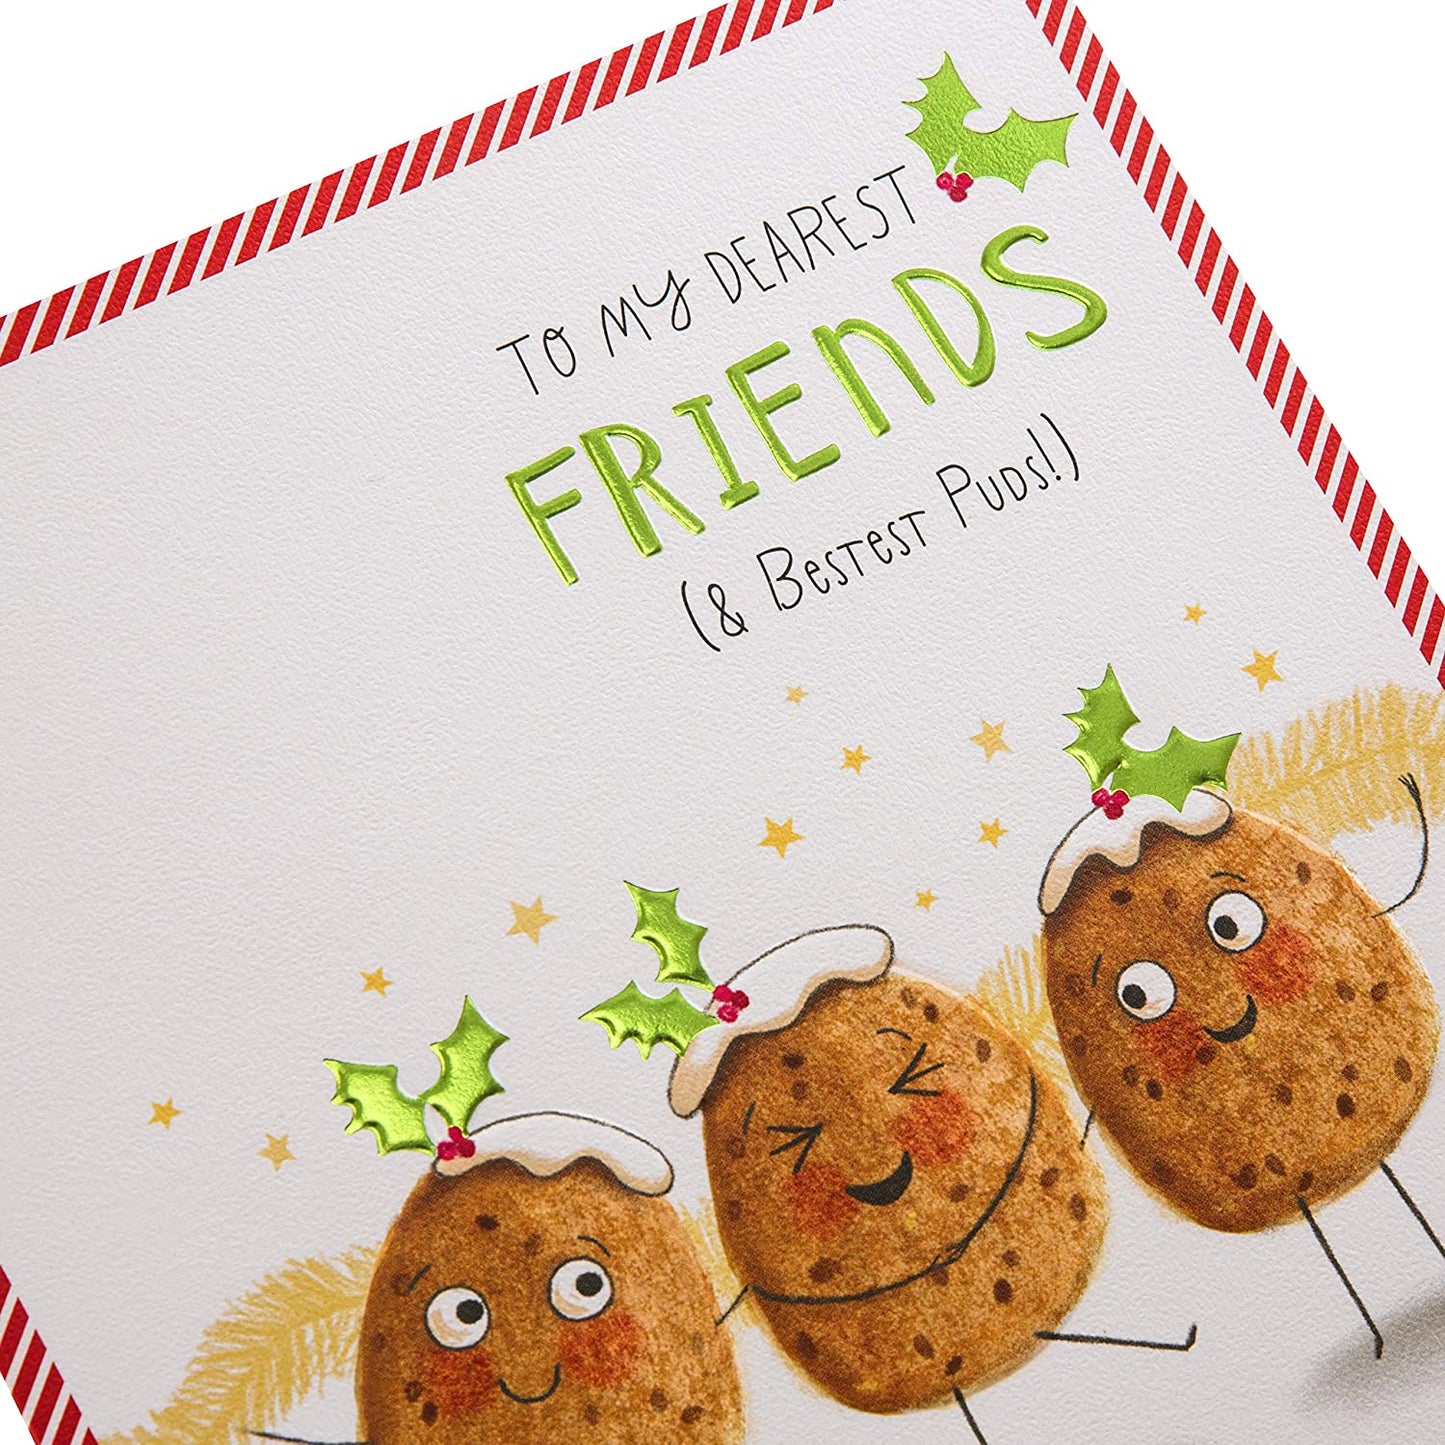 To My Dearest Friends Pun Puddings Design Christmas Card 